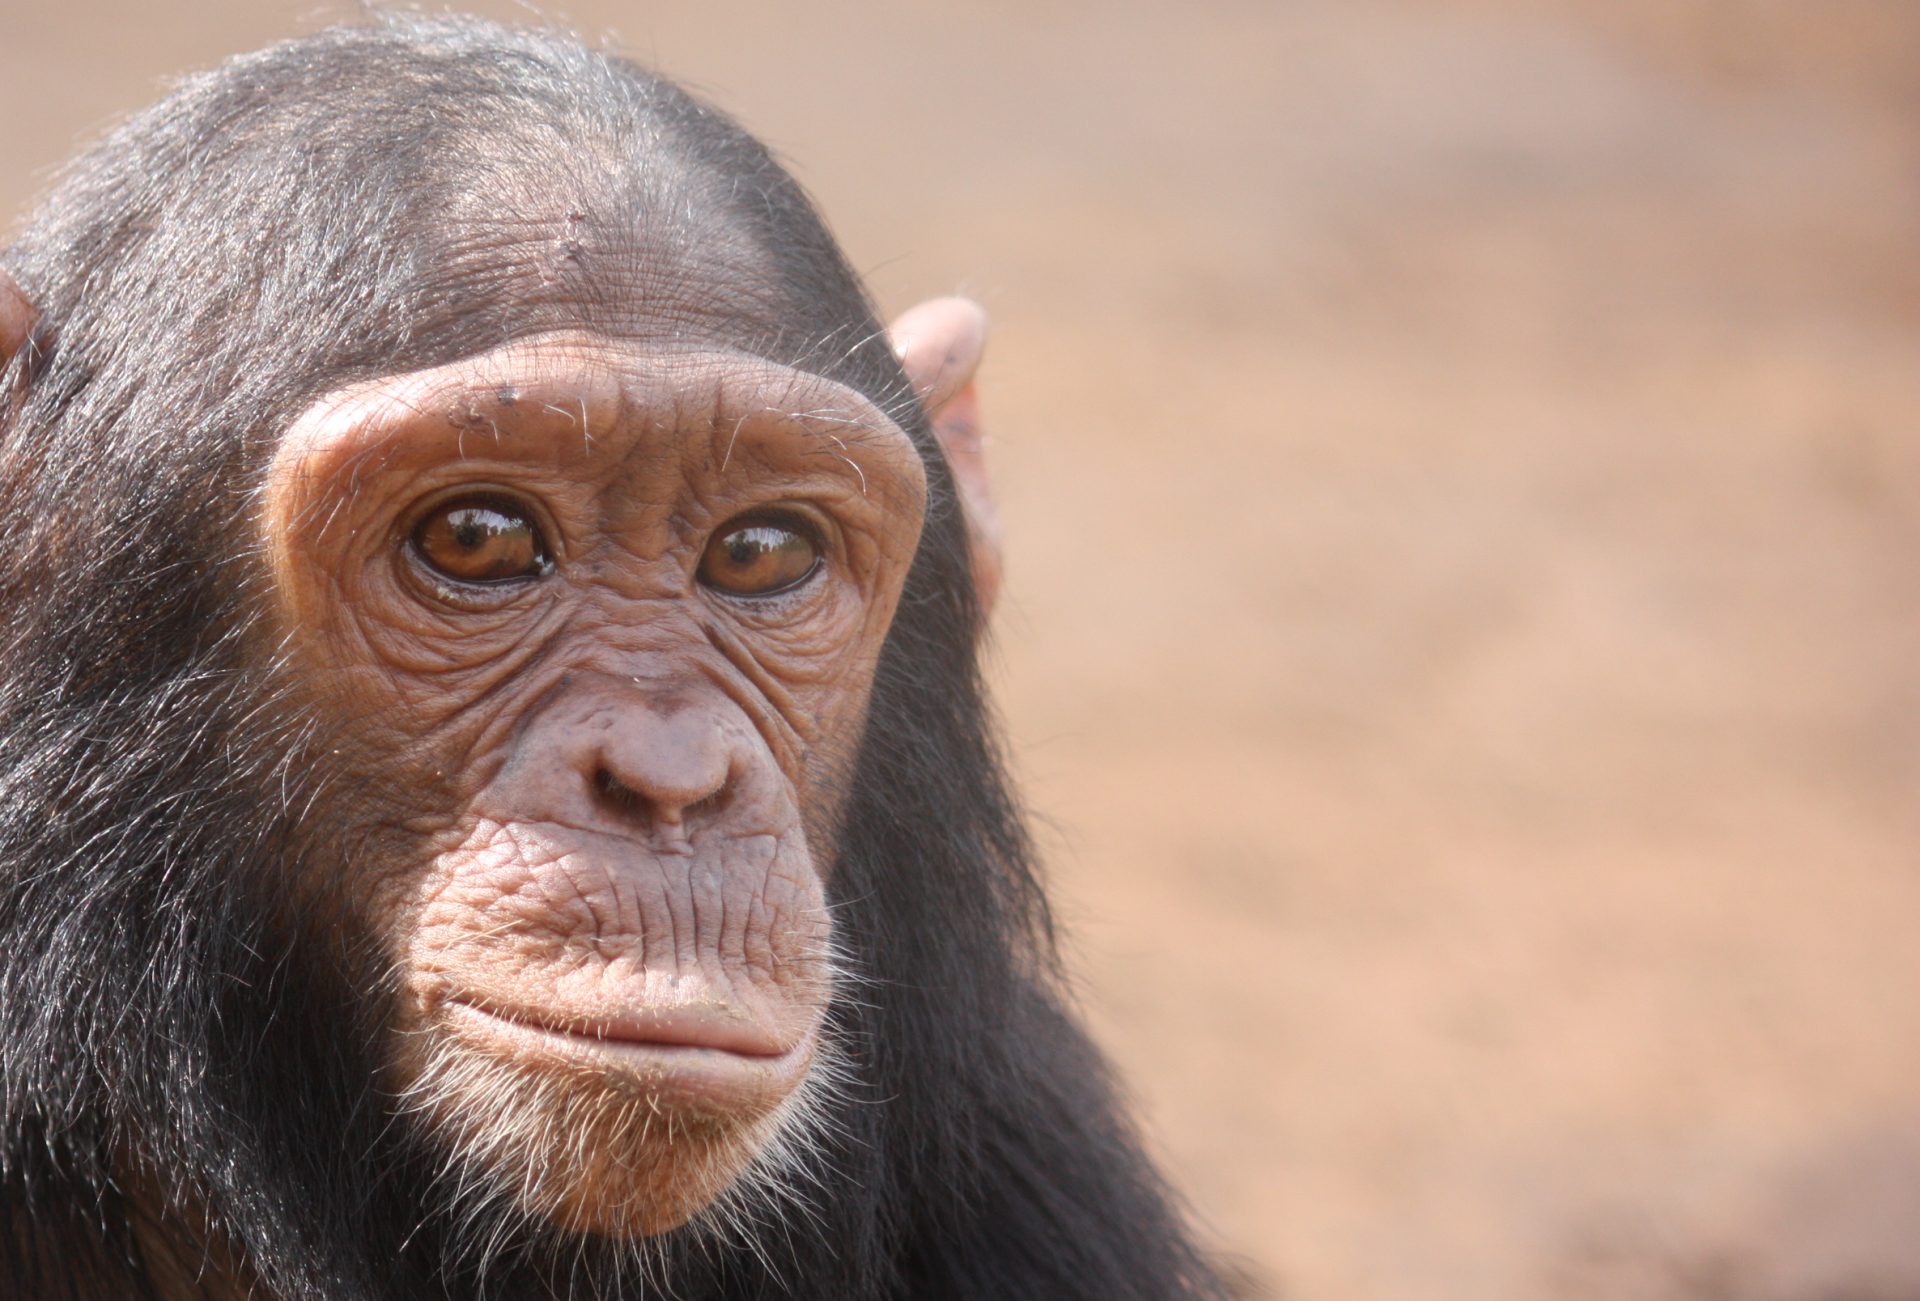 25 monkeys seized in Zimbabwe